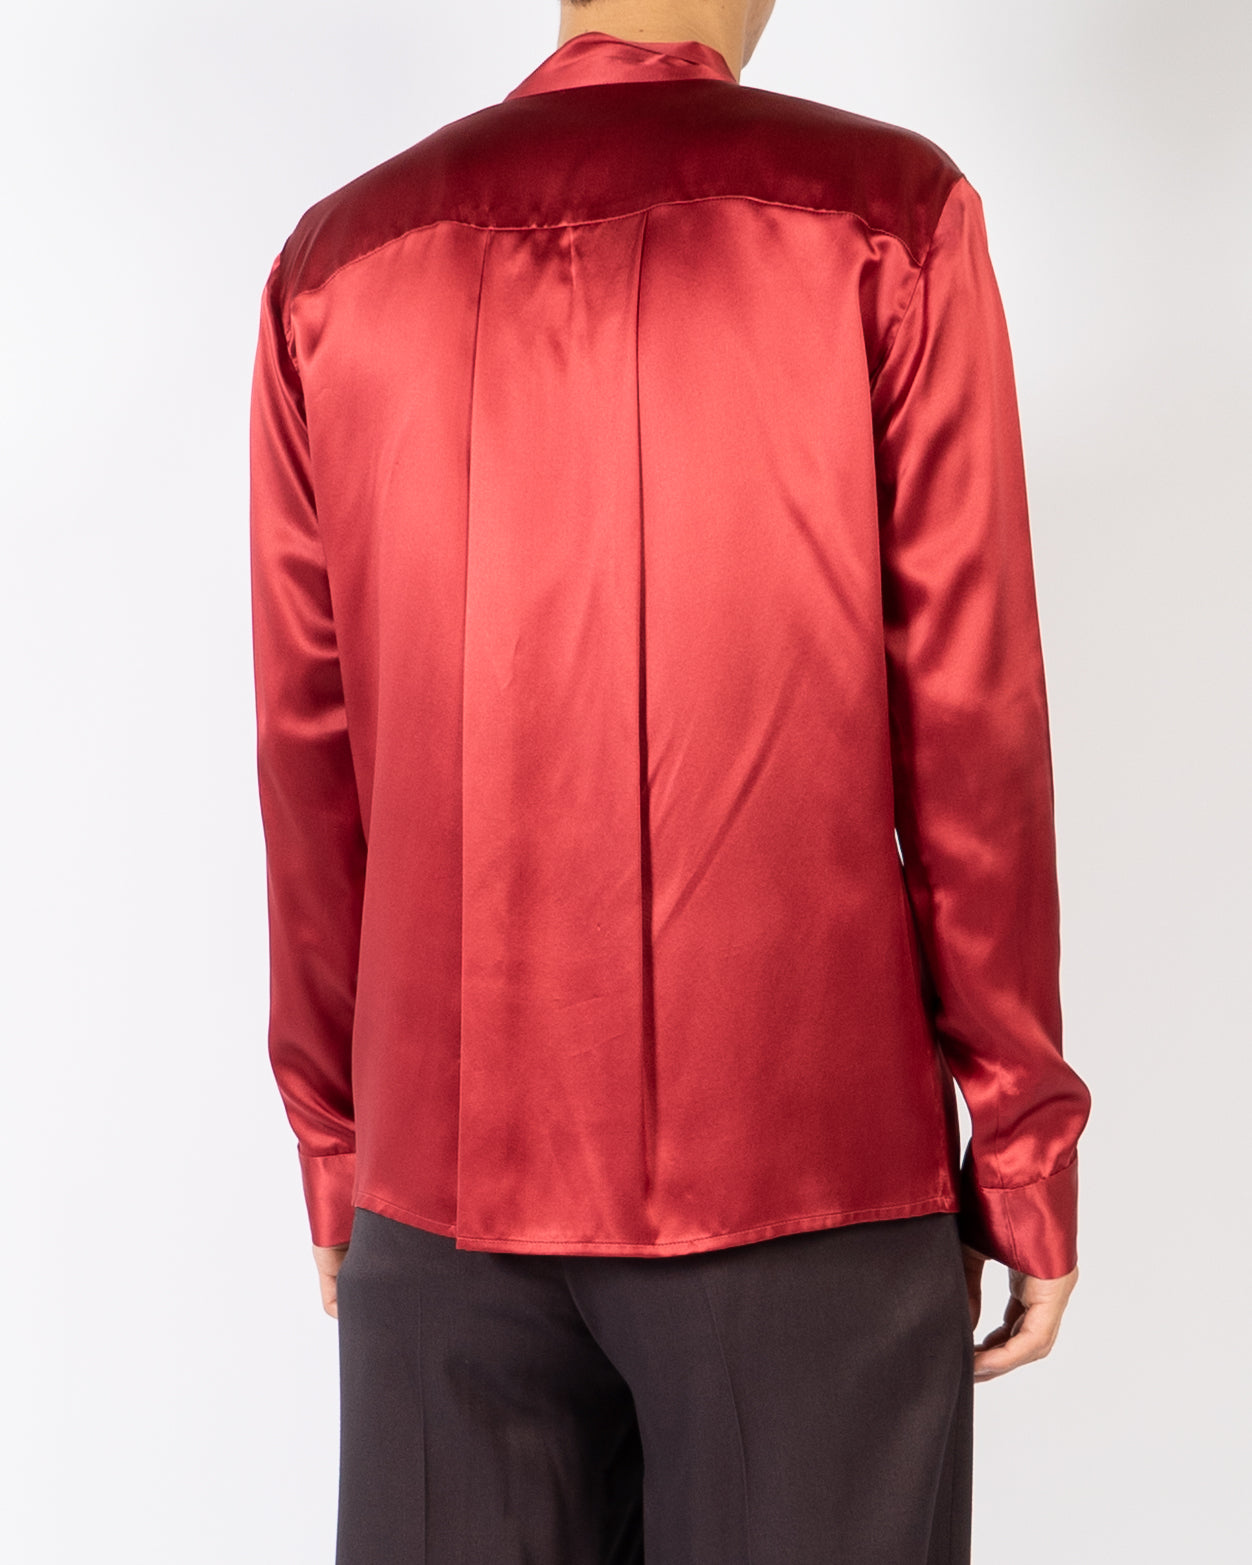 FW18 Red Silk Backyardarchive Collar – Shirt Scarf